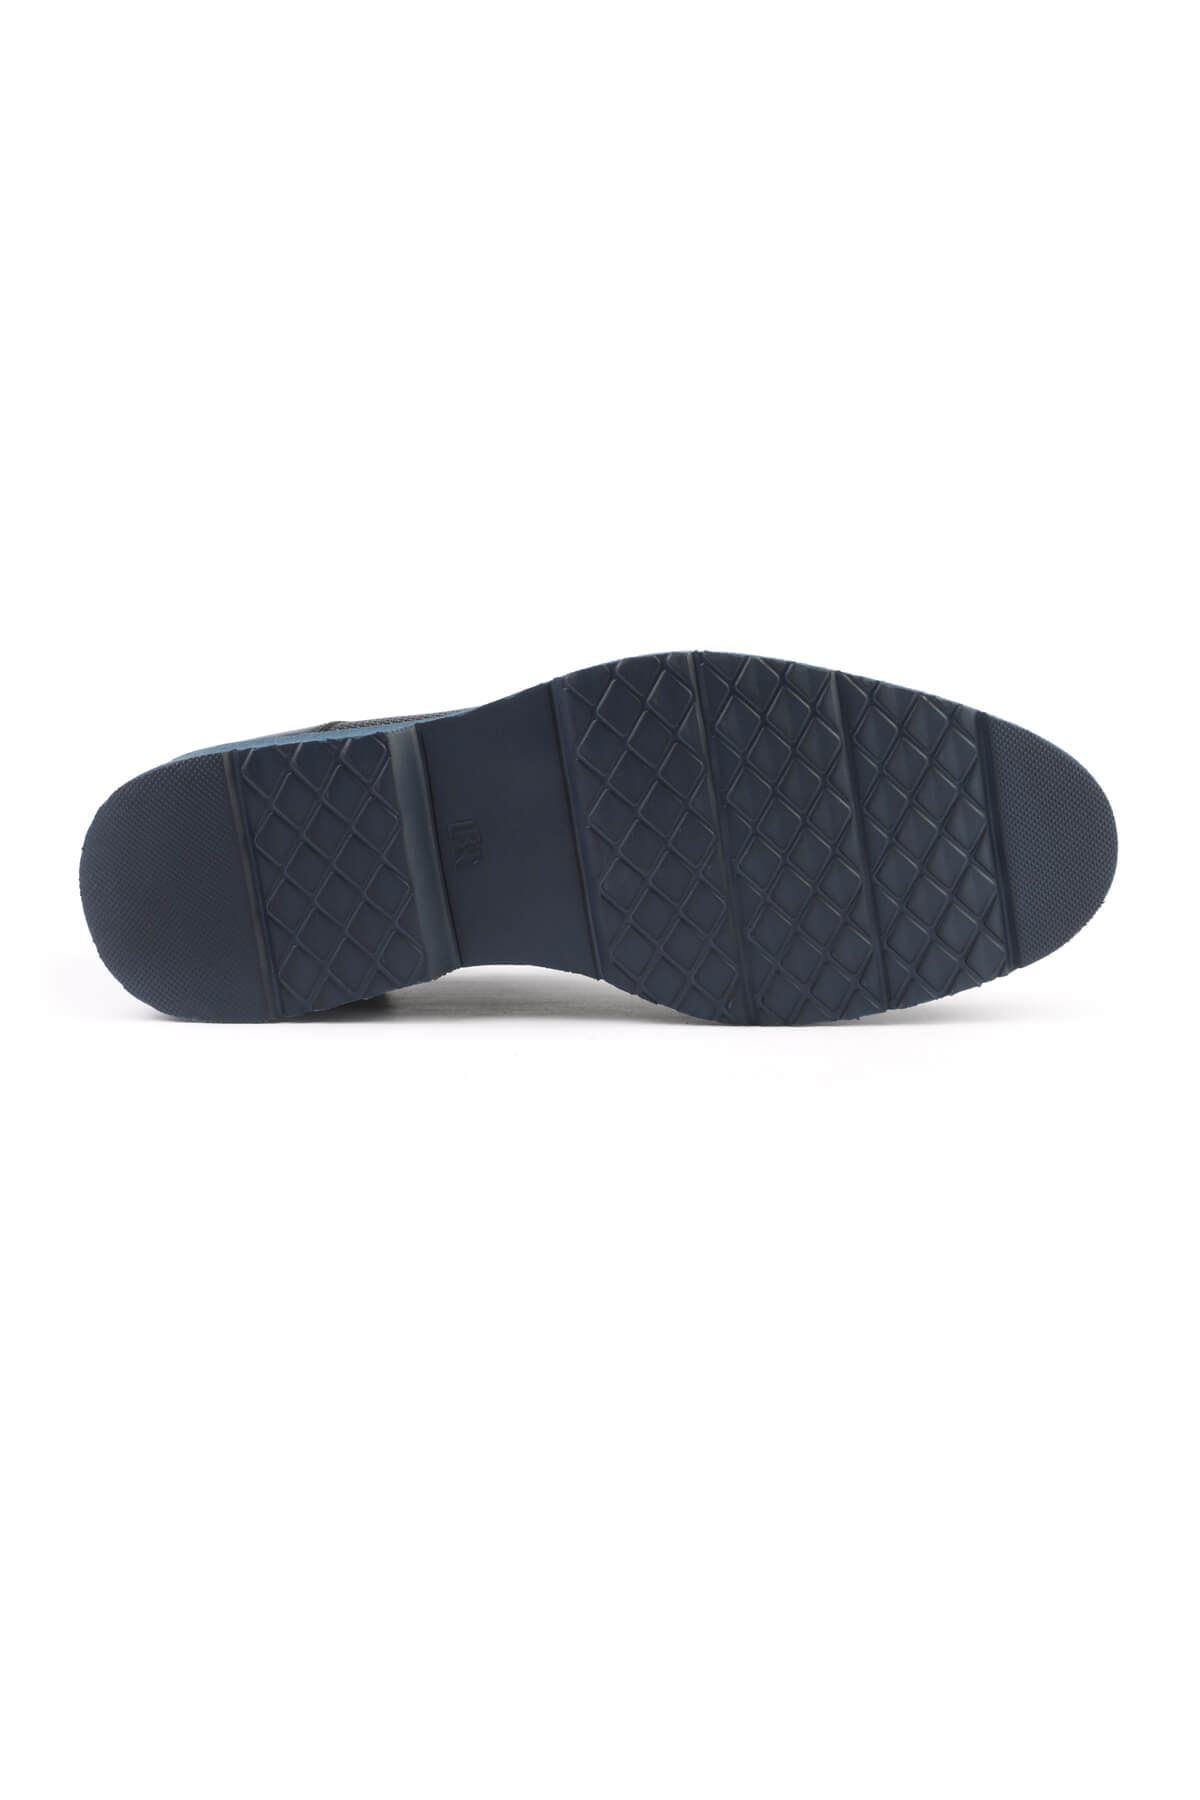 Libero 2999 Navy Blue Casual Shoes